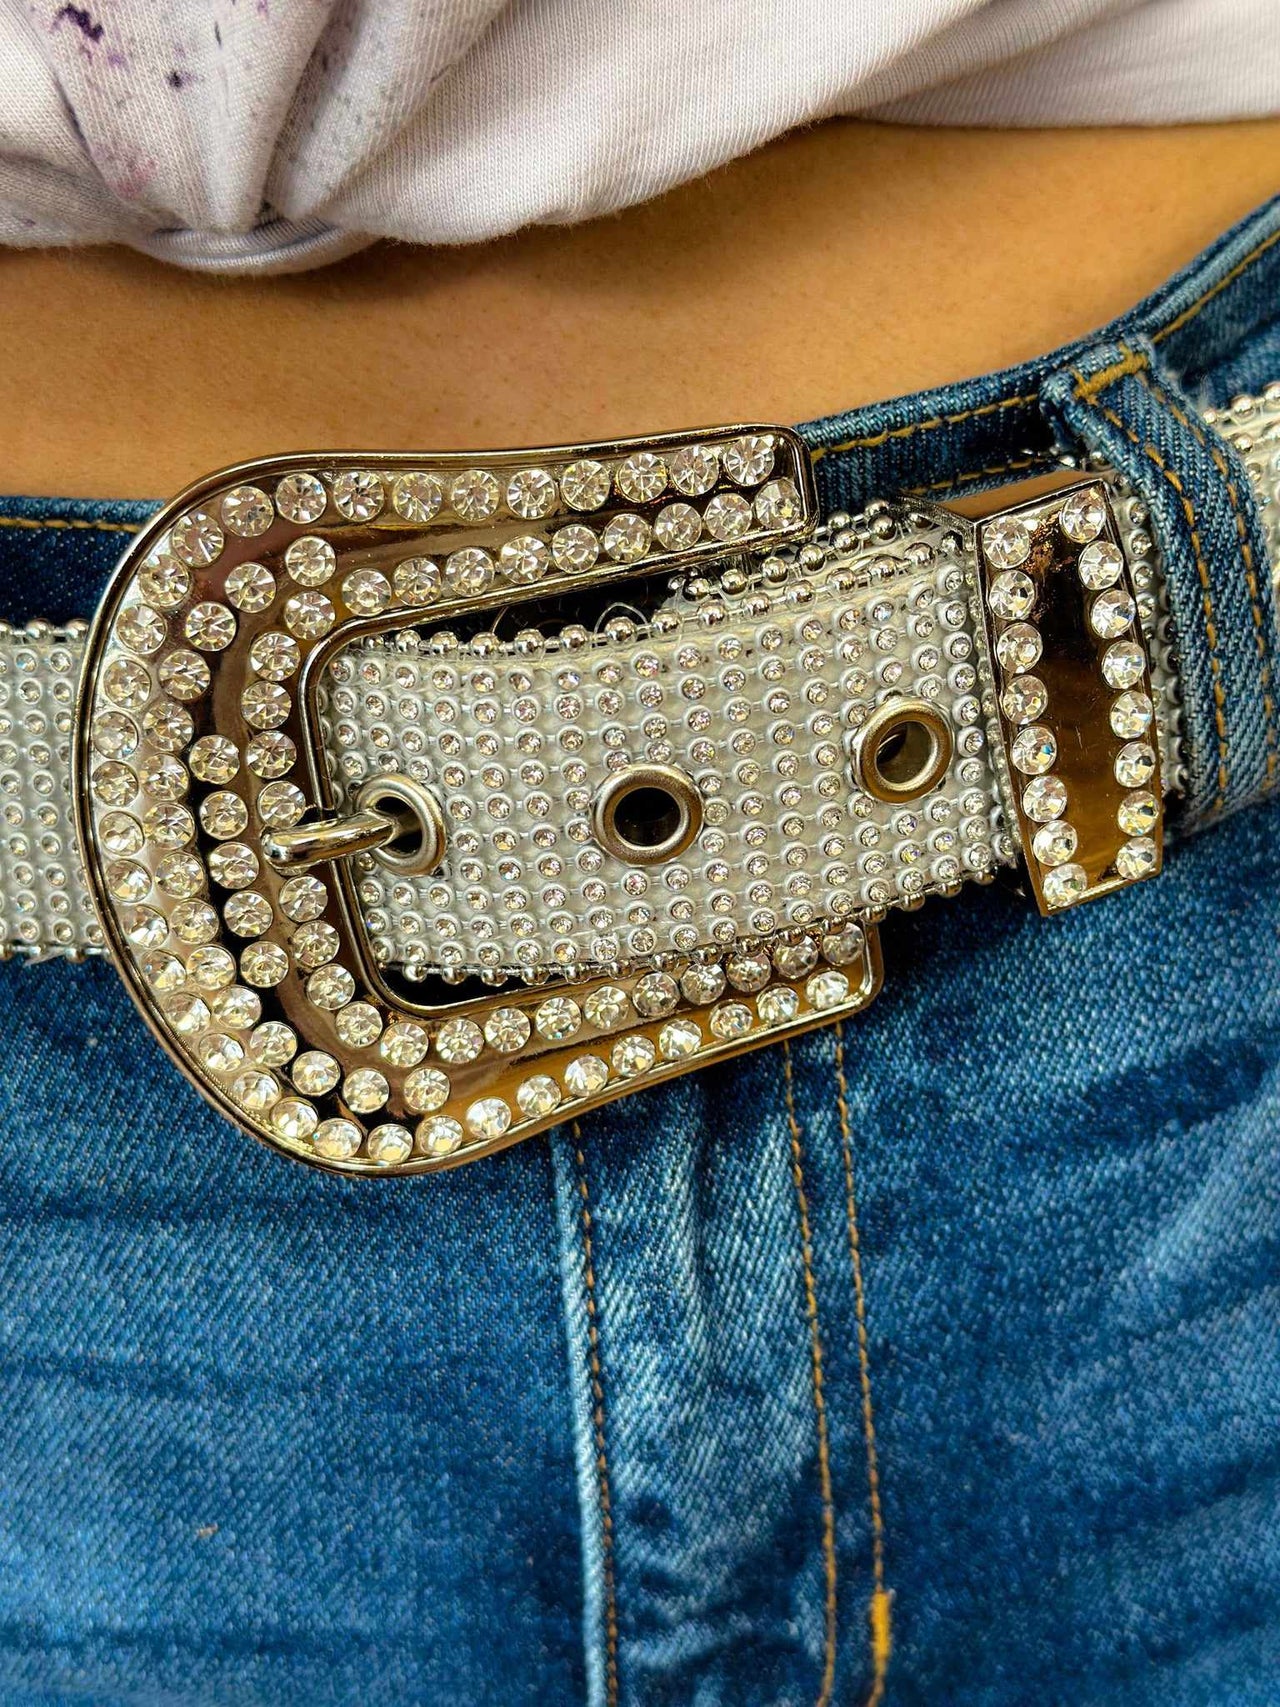 Western Belts Cowgirl Bling Rhinestone Studded Fashion Rodeo 